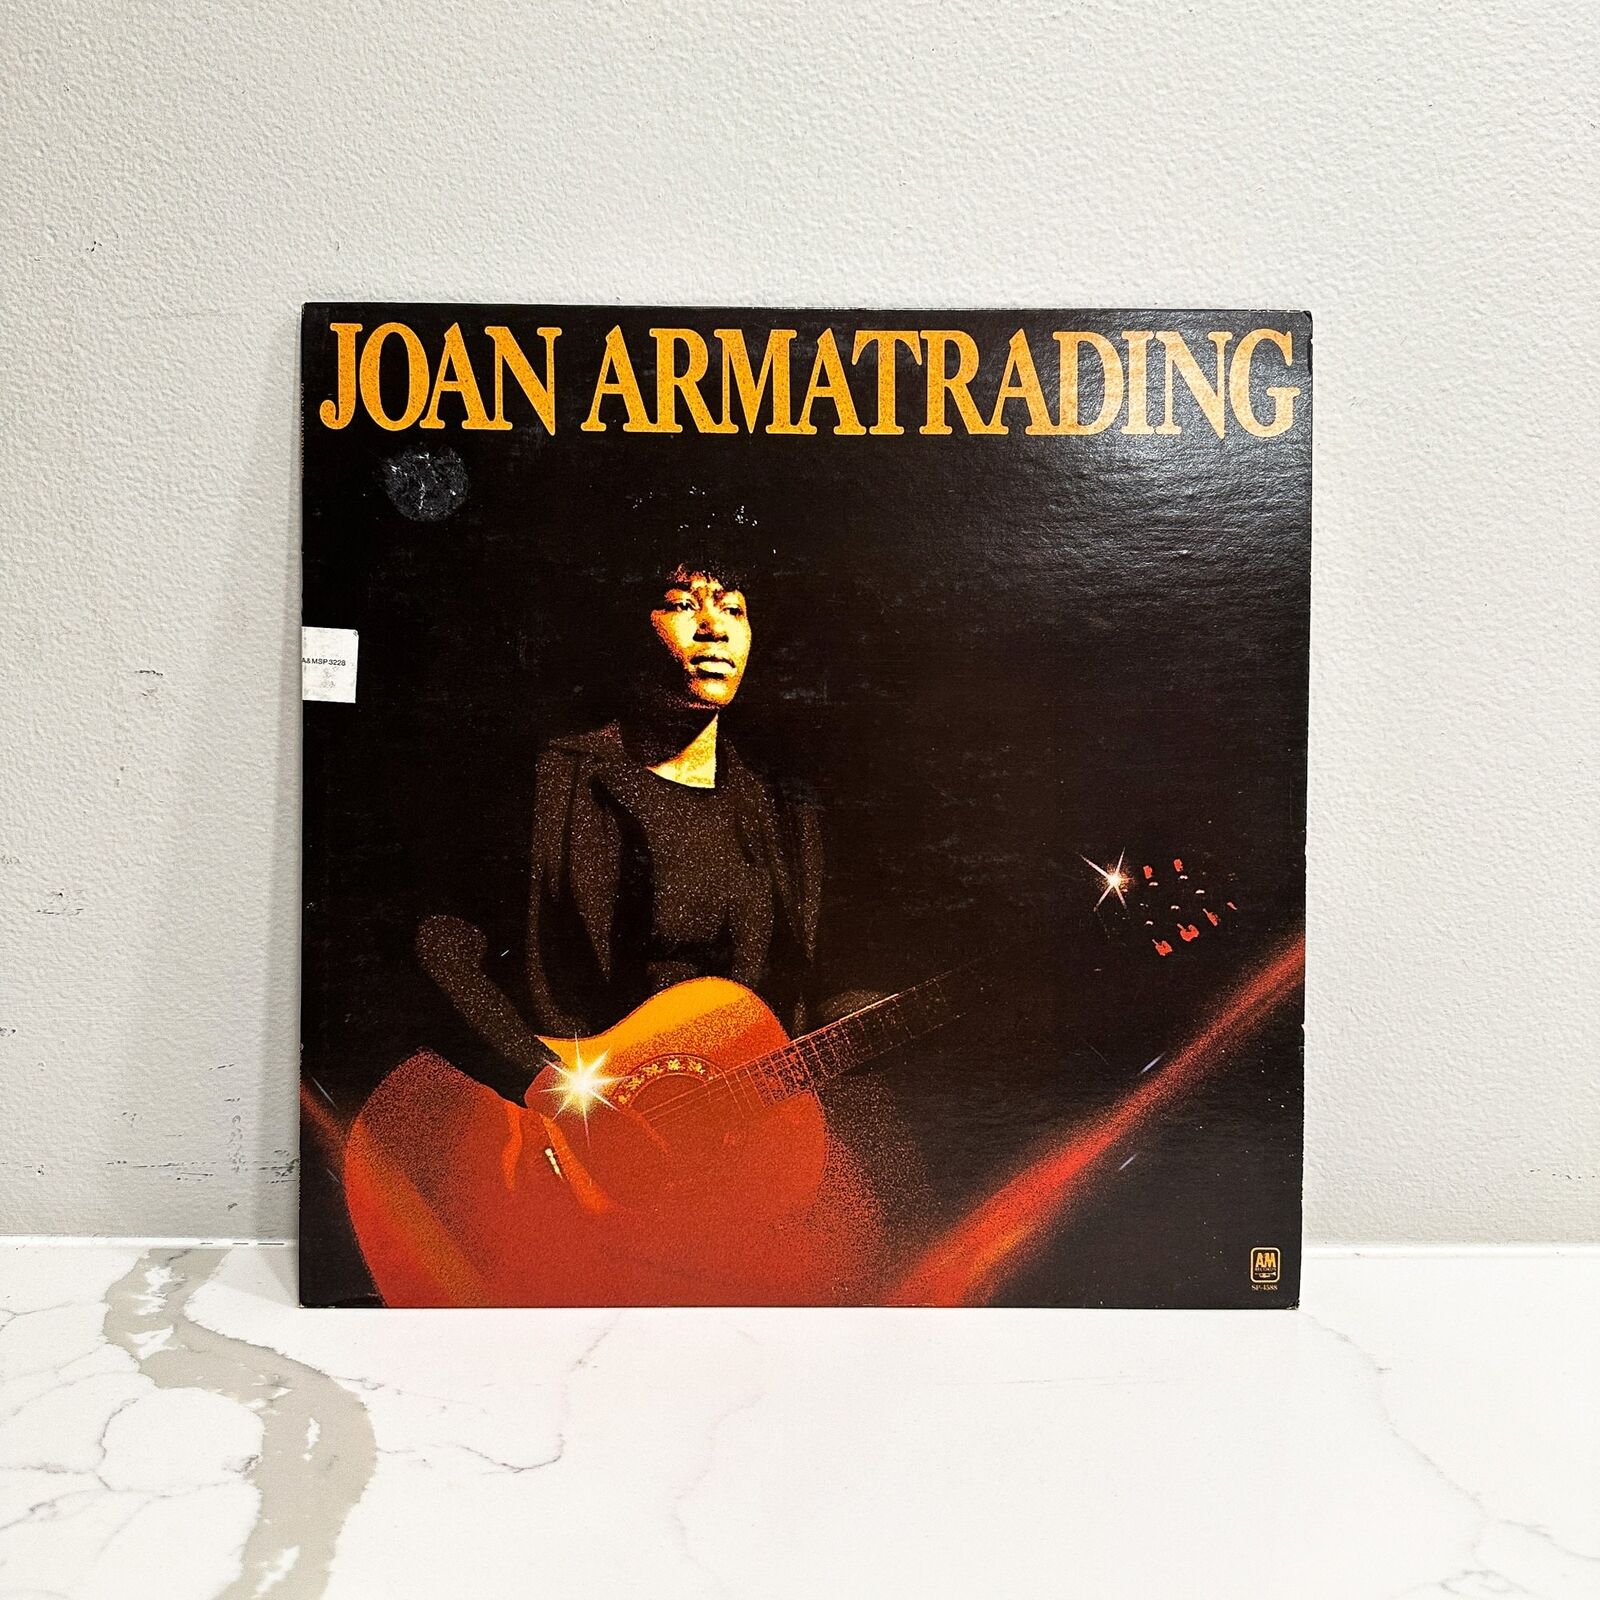 Joan Armatrading – Joan Armatrading - Vinyl LP Record - 1997